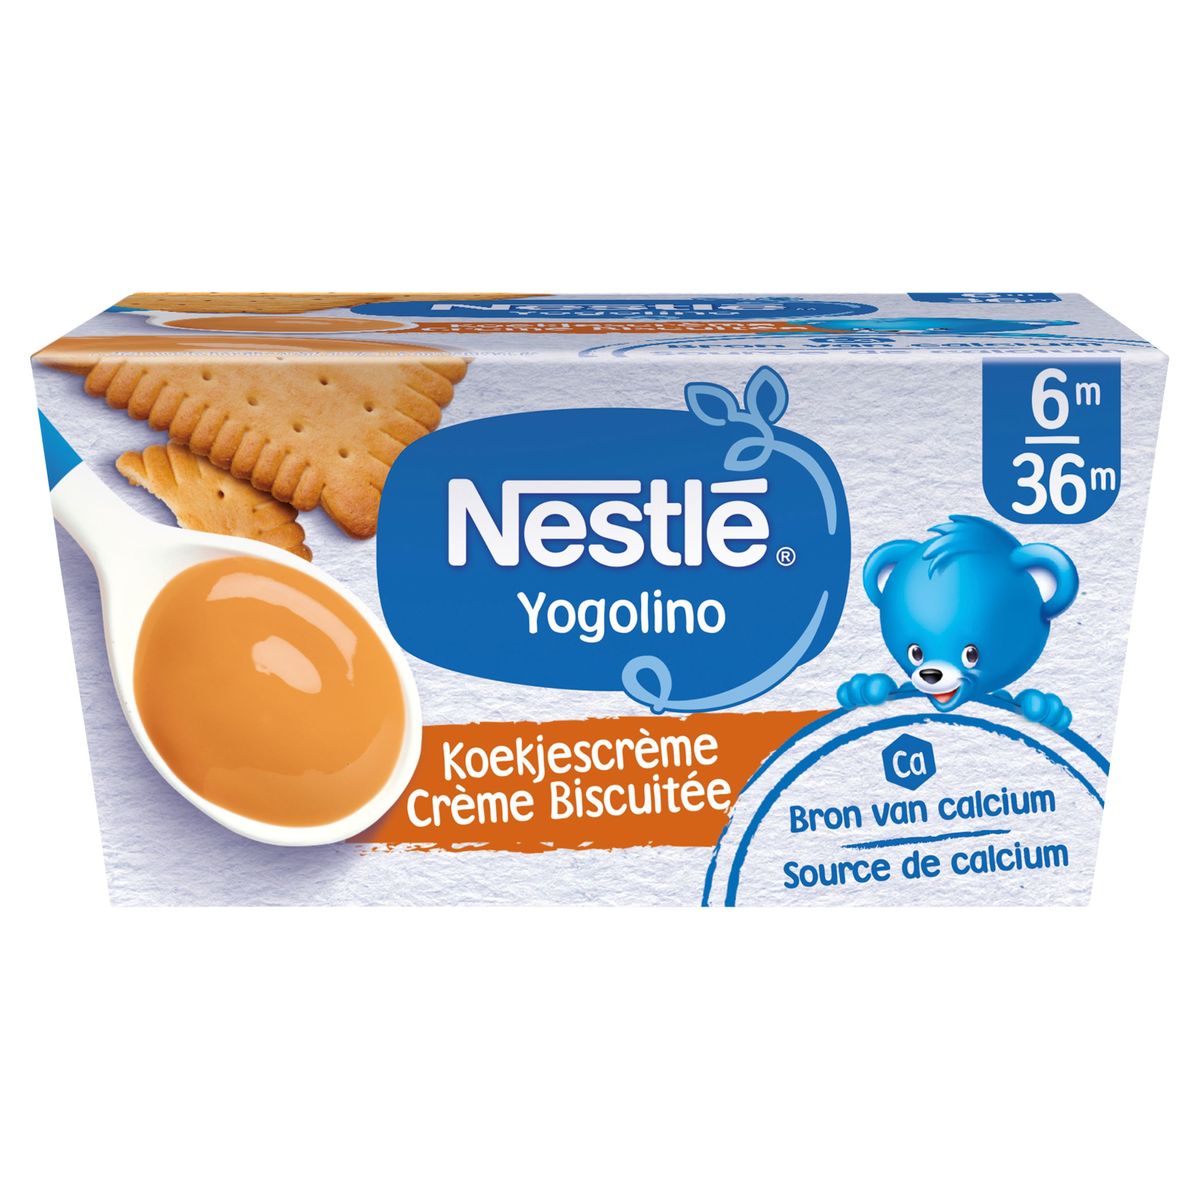 Nestlé Yogolino Melkdessert Koekjescrème vanaf 6 maanden 4x100g